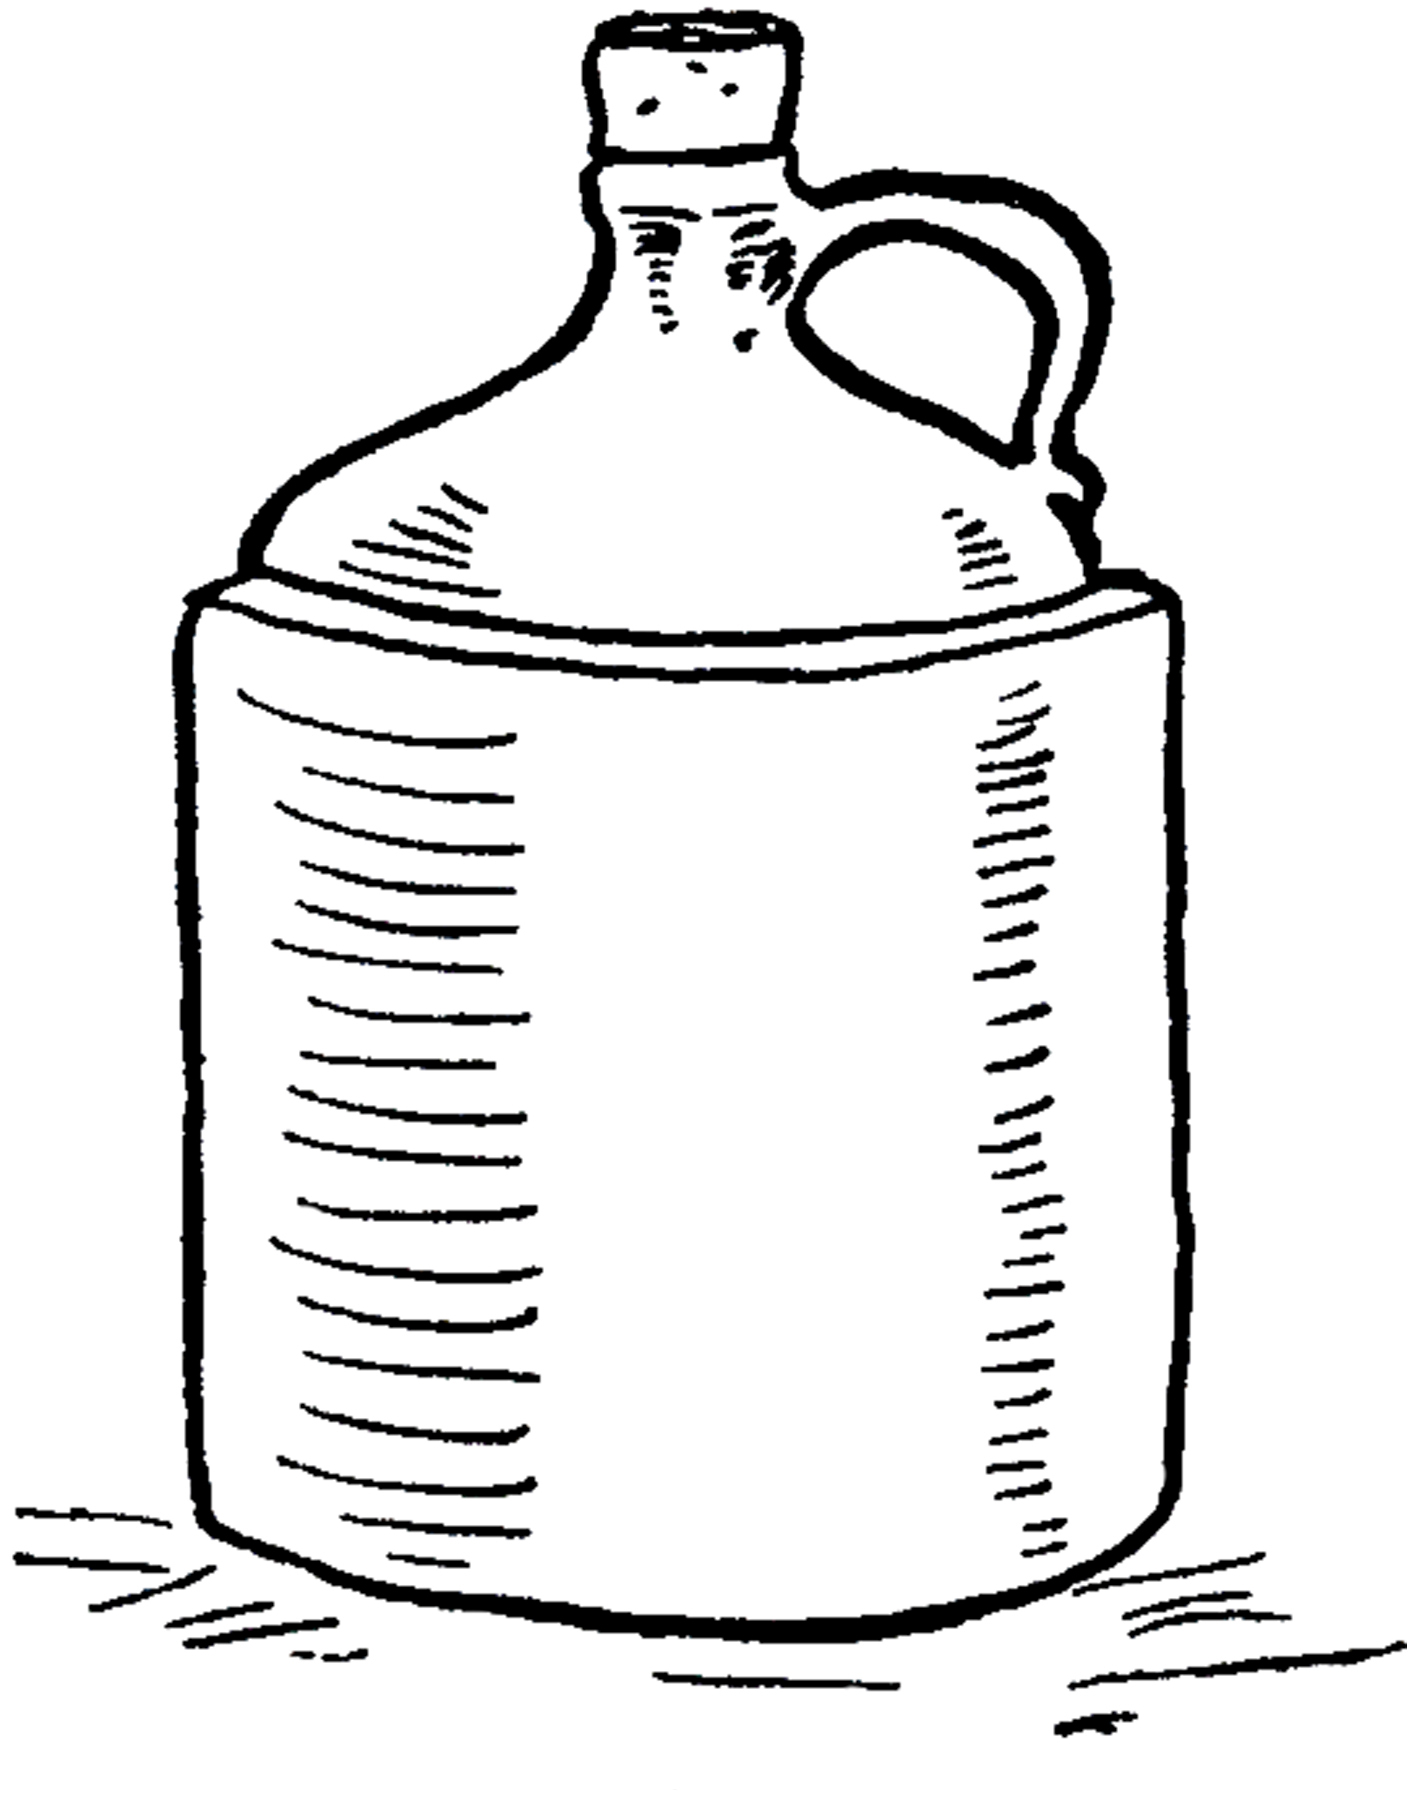 Moonshine jug drawing.